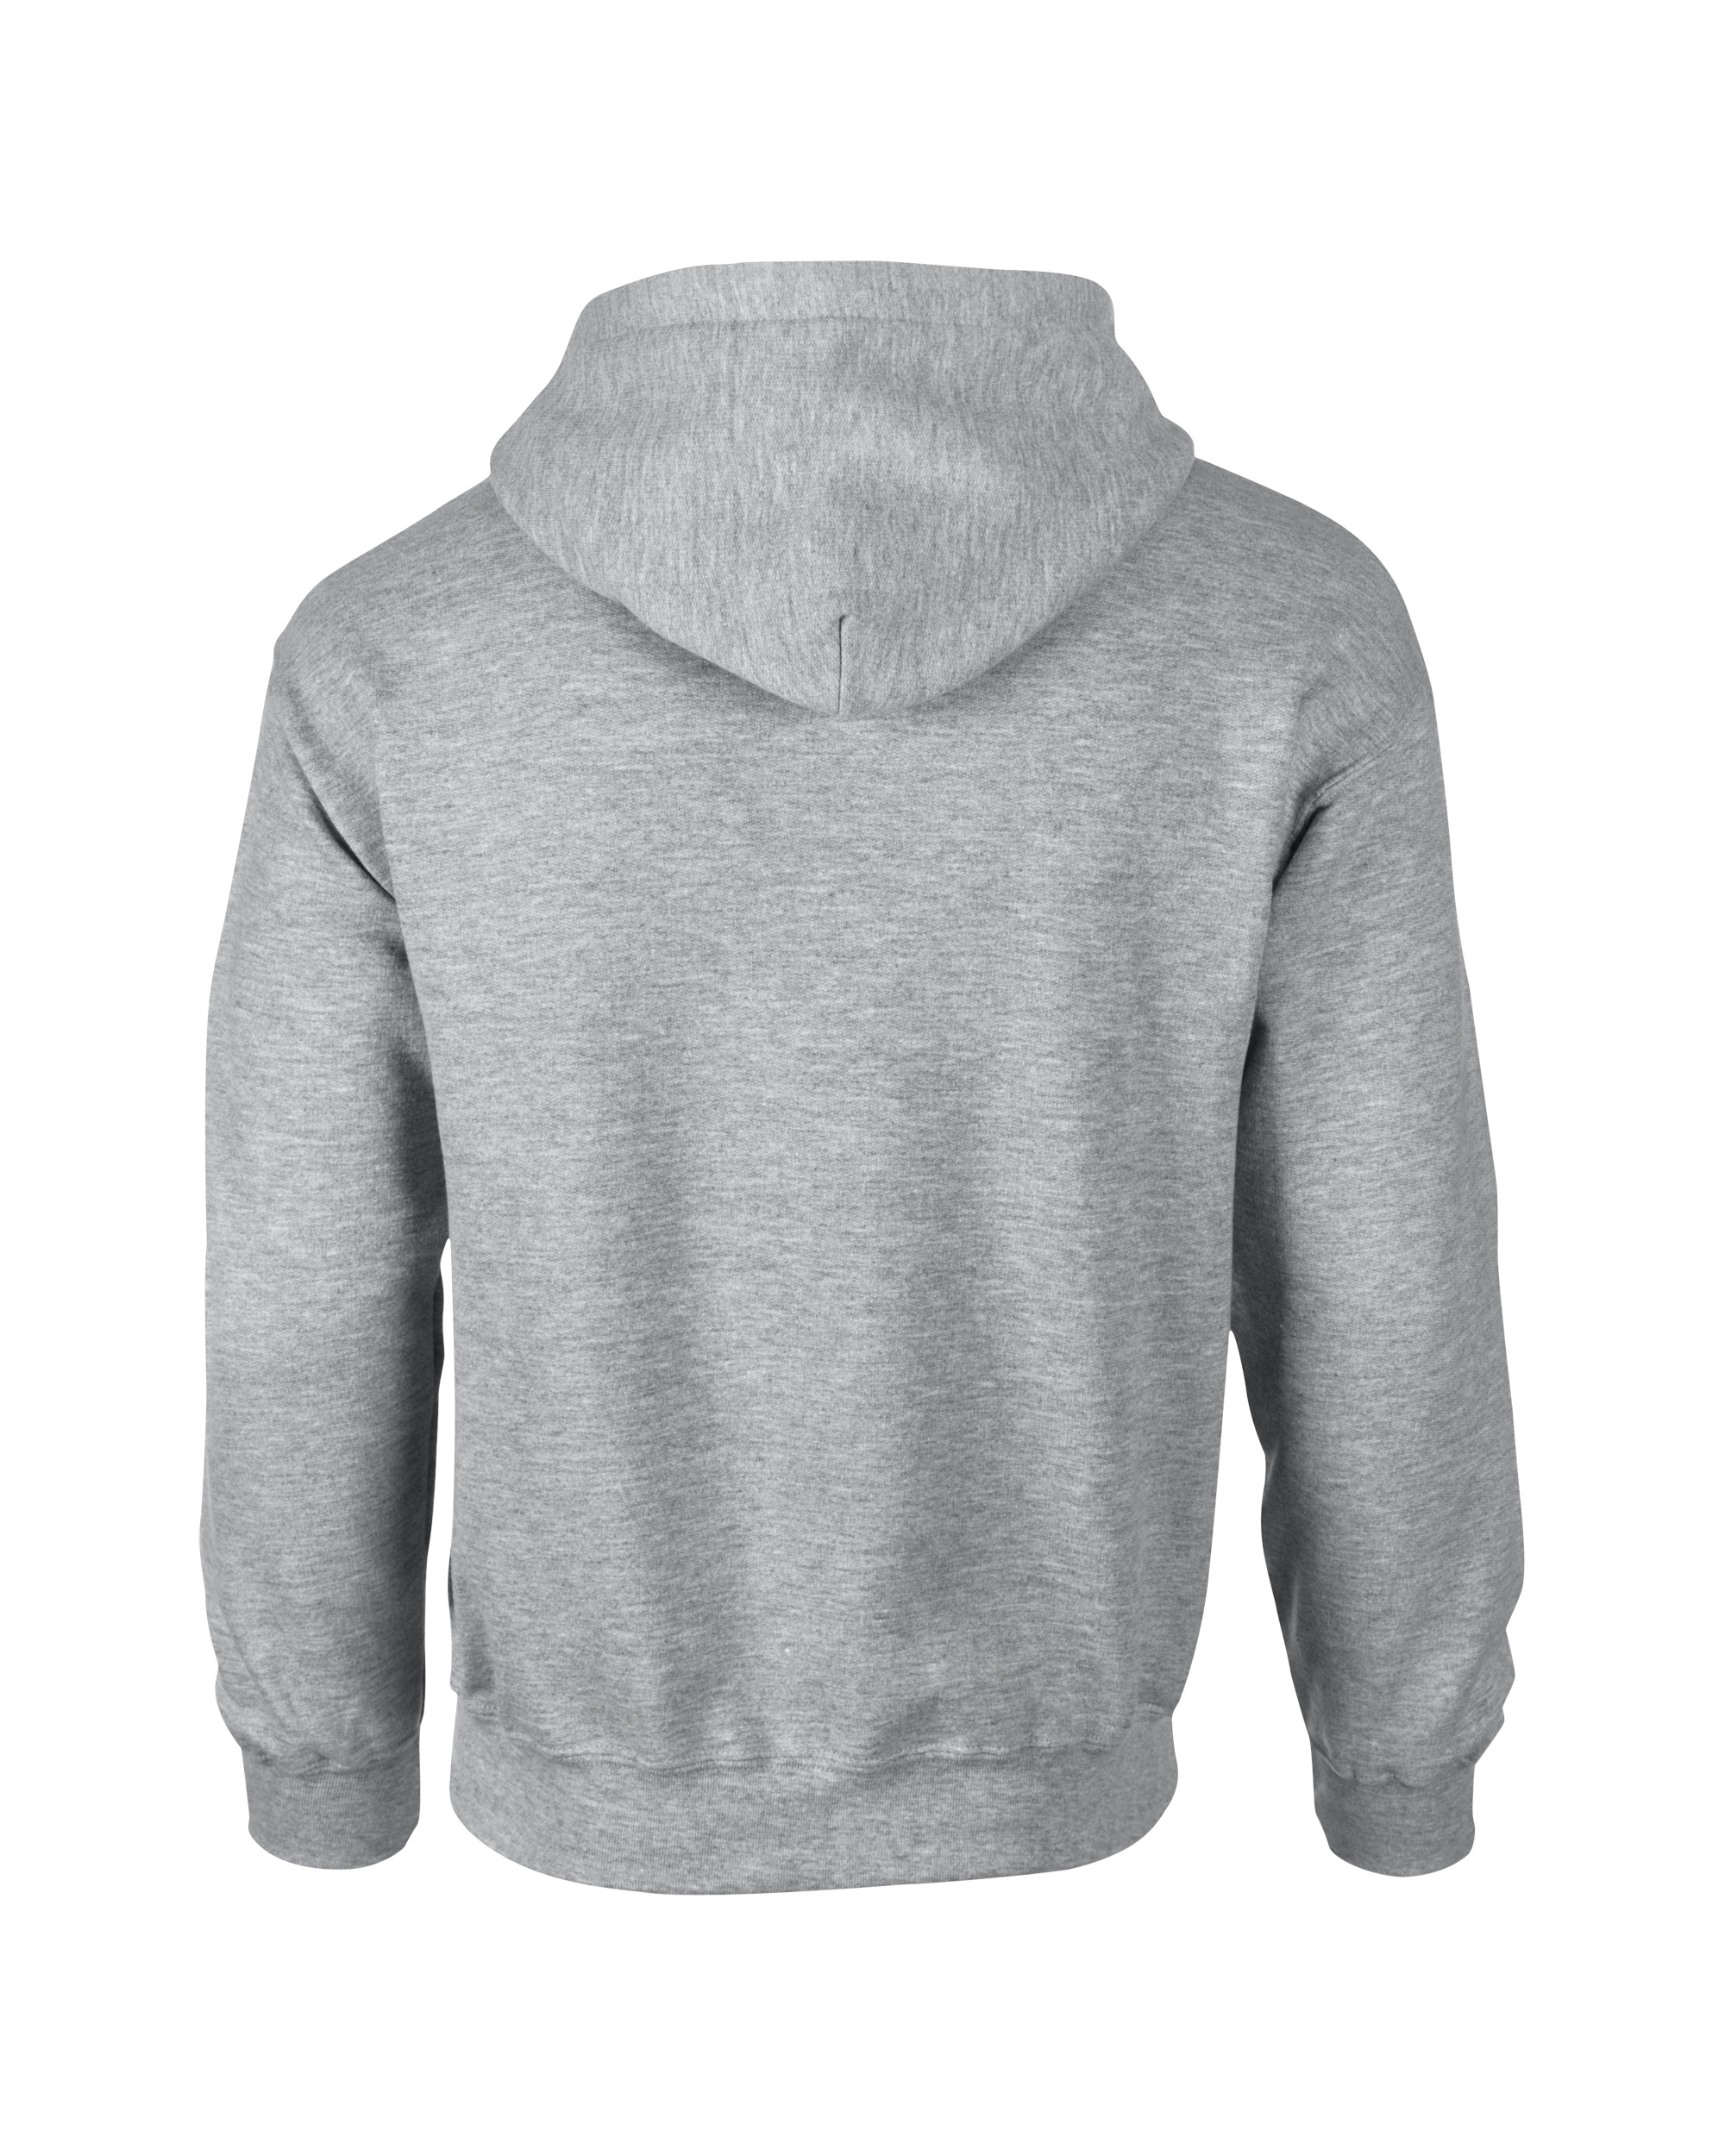 Adult Unisex Heavy Blend Pullover Hood Sweatshirt - Team Shirt Pros